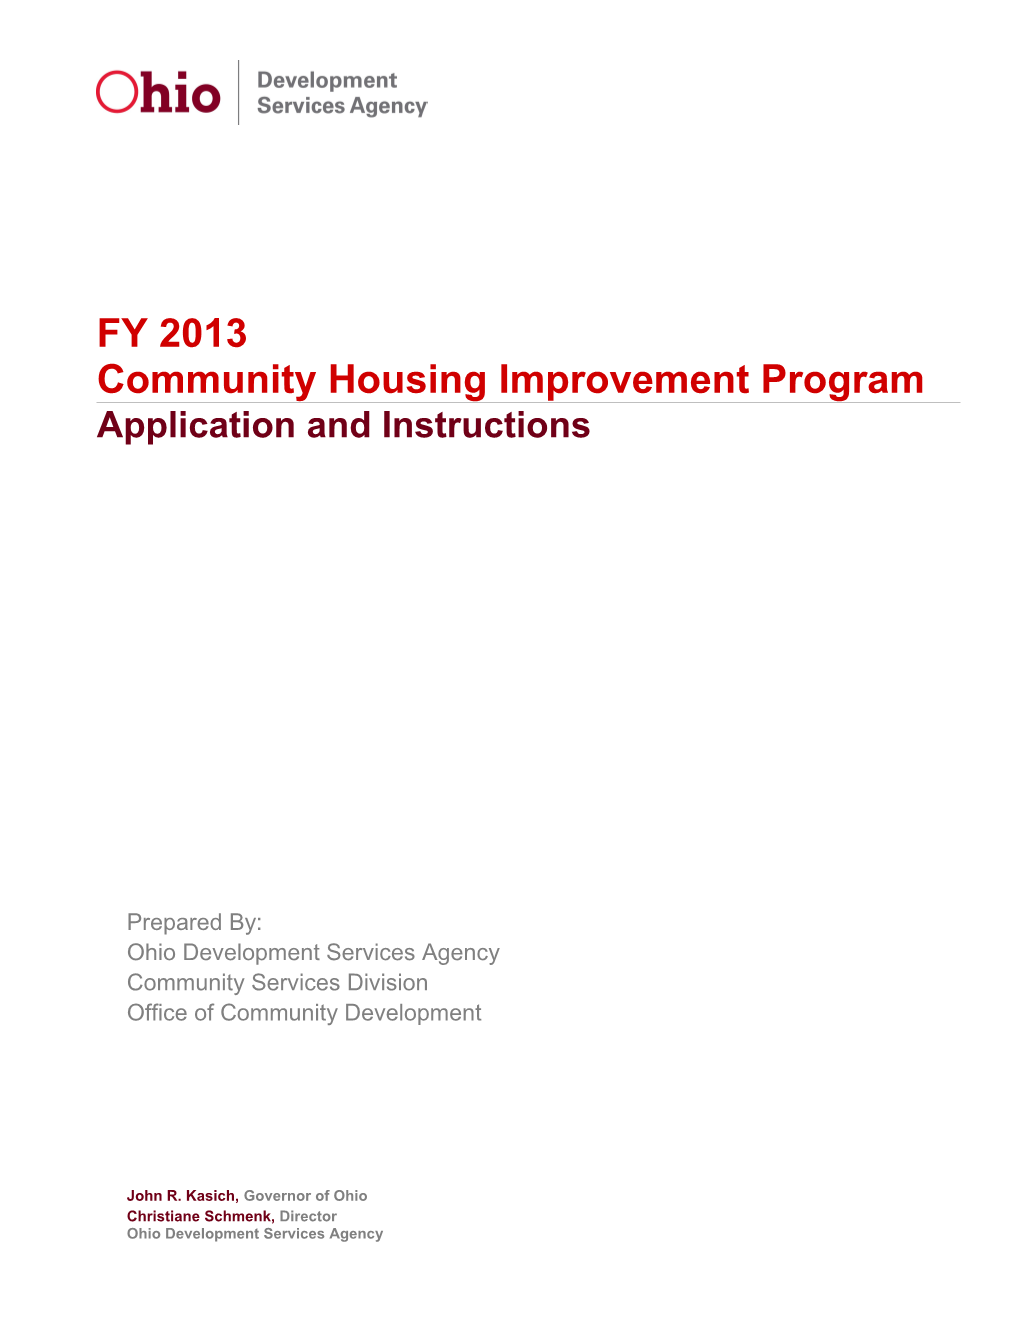 Community Housing Improvement Program